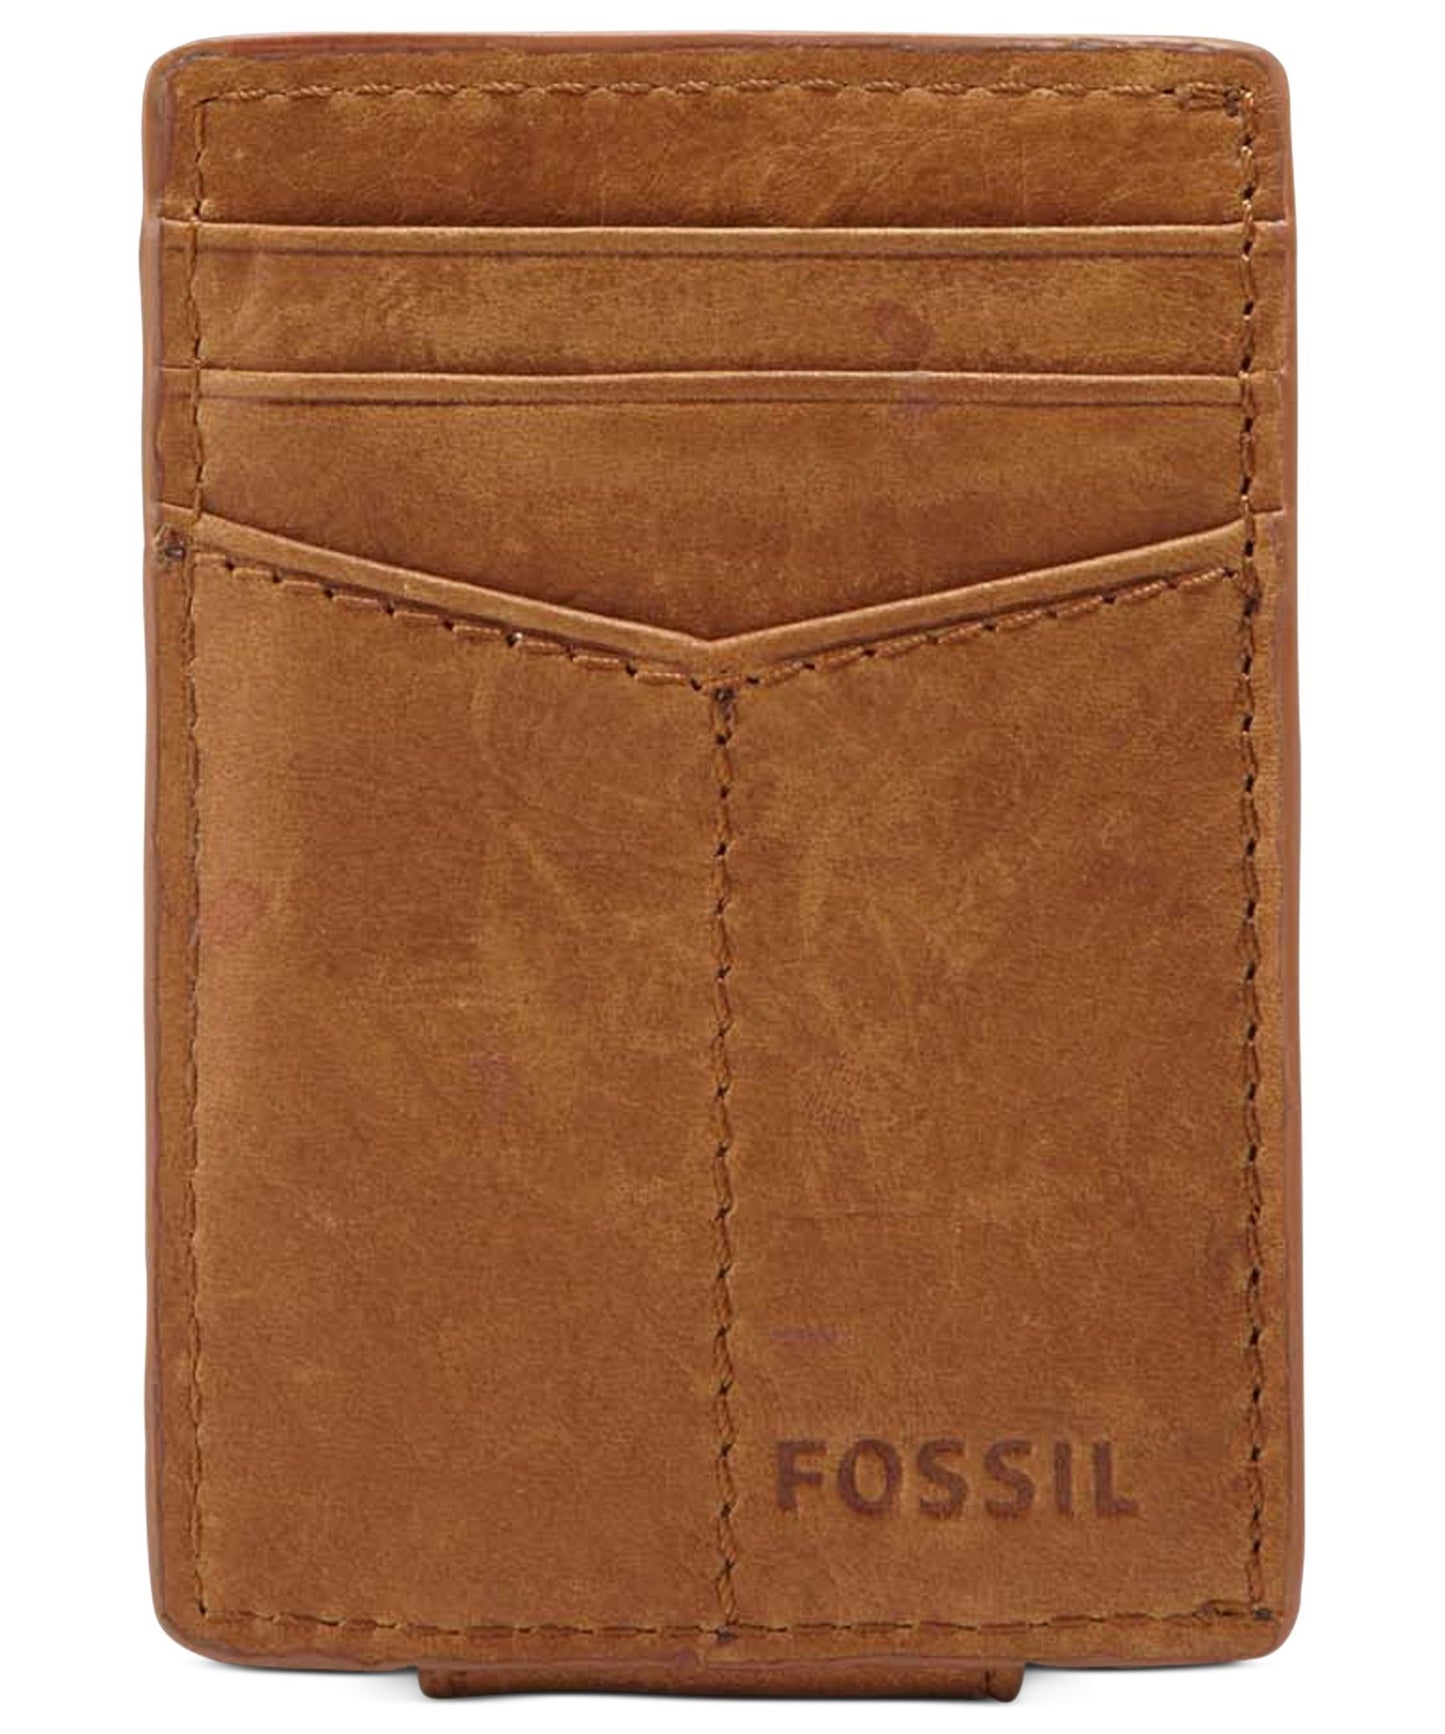 Fossil Ingram Magnetic Card Case Leather Wallet